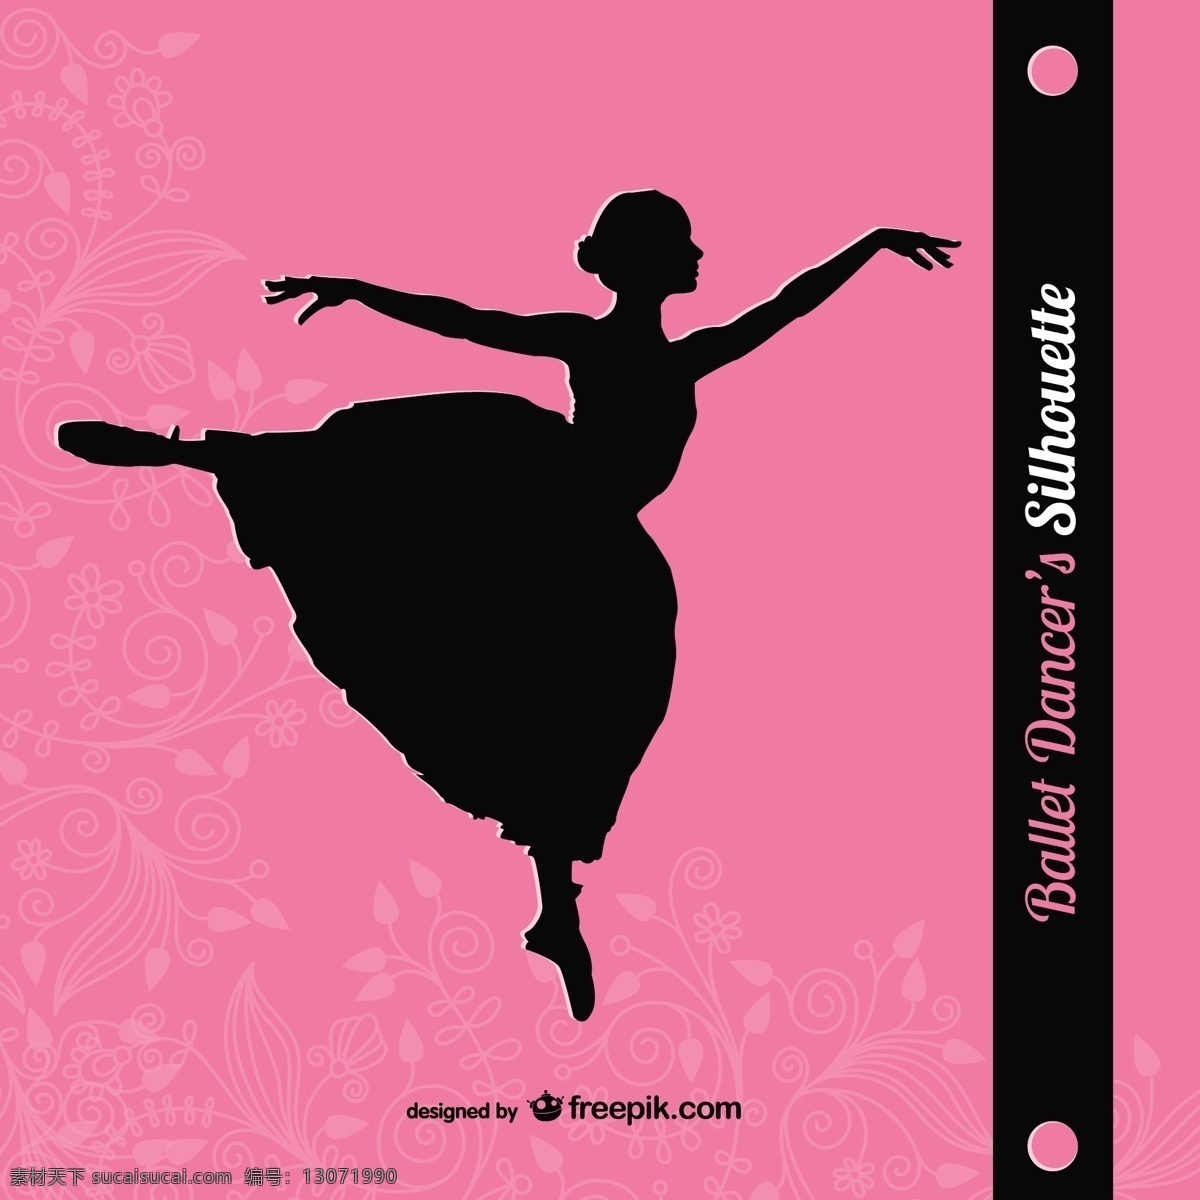 bellerina 剪影 摘要设计 舞蹈 粉红 艺术 平面 轮廓 人 平面设计元素 芭蕾舞 女士 经典 插图 设计元素 图形 跳舞 女人的轮廓 粉色